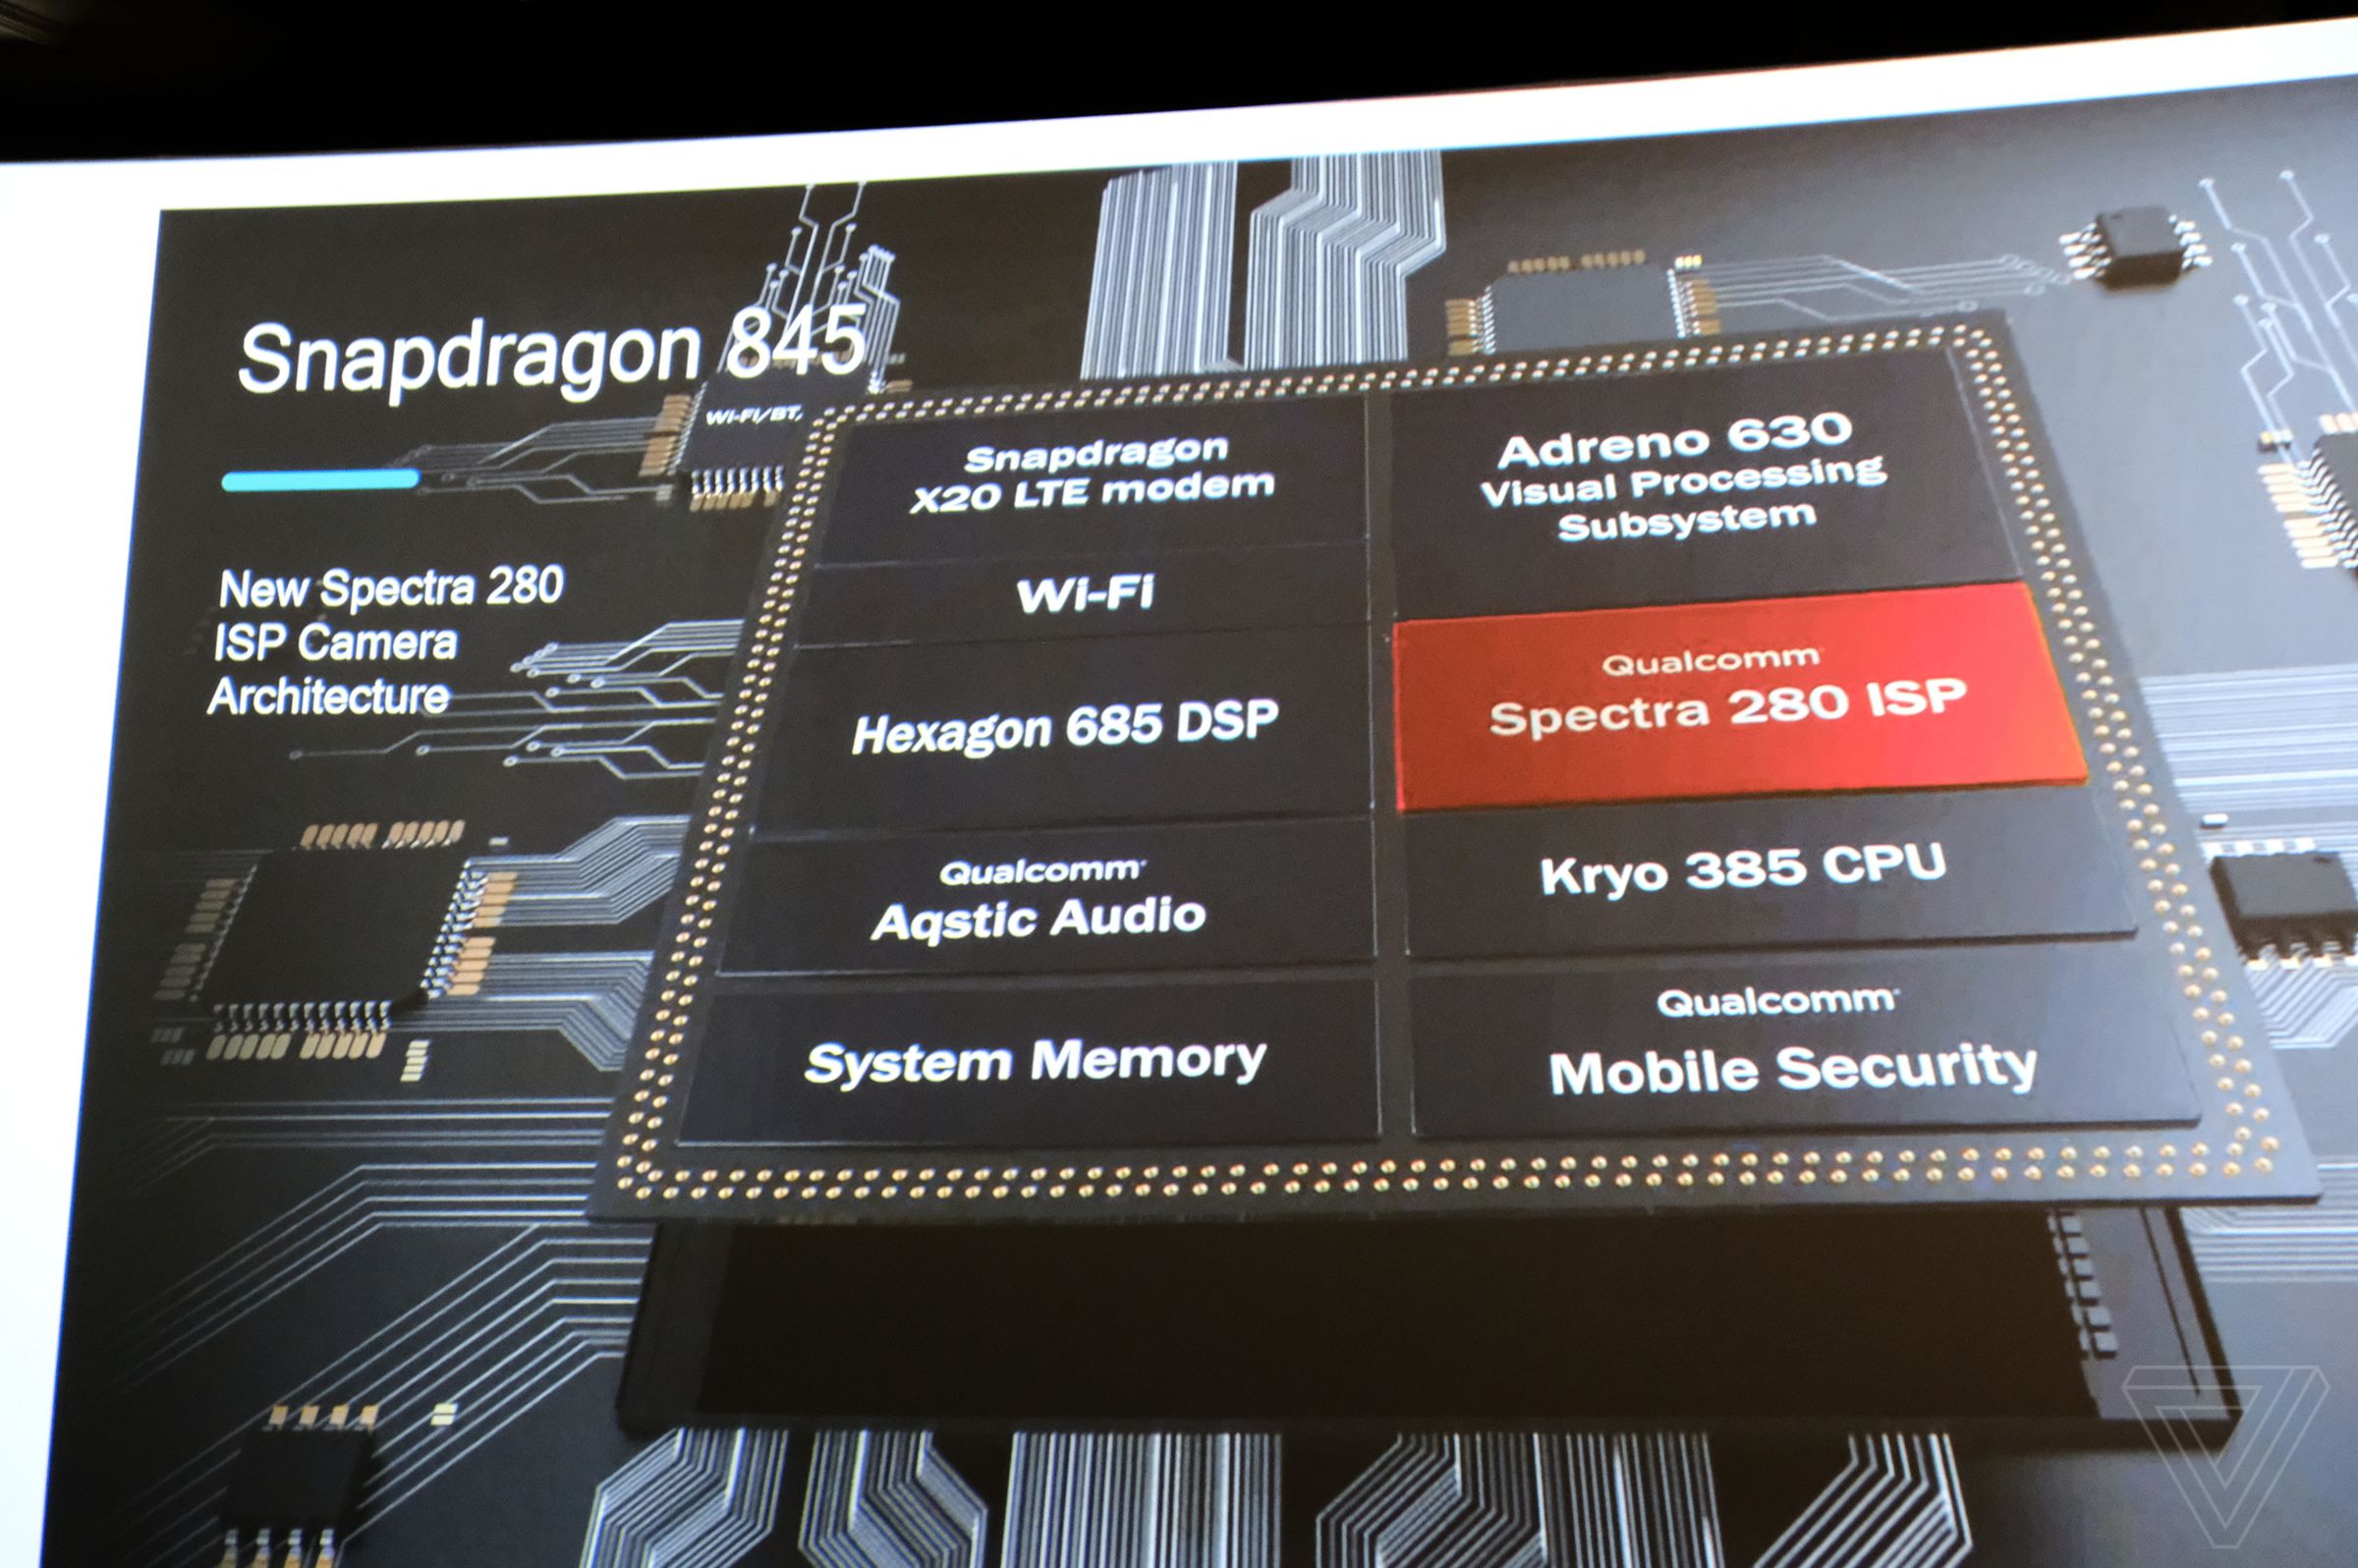 Qualcomm Snapdragon 845 platform